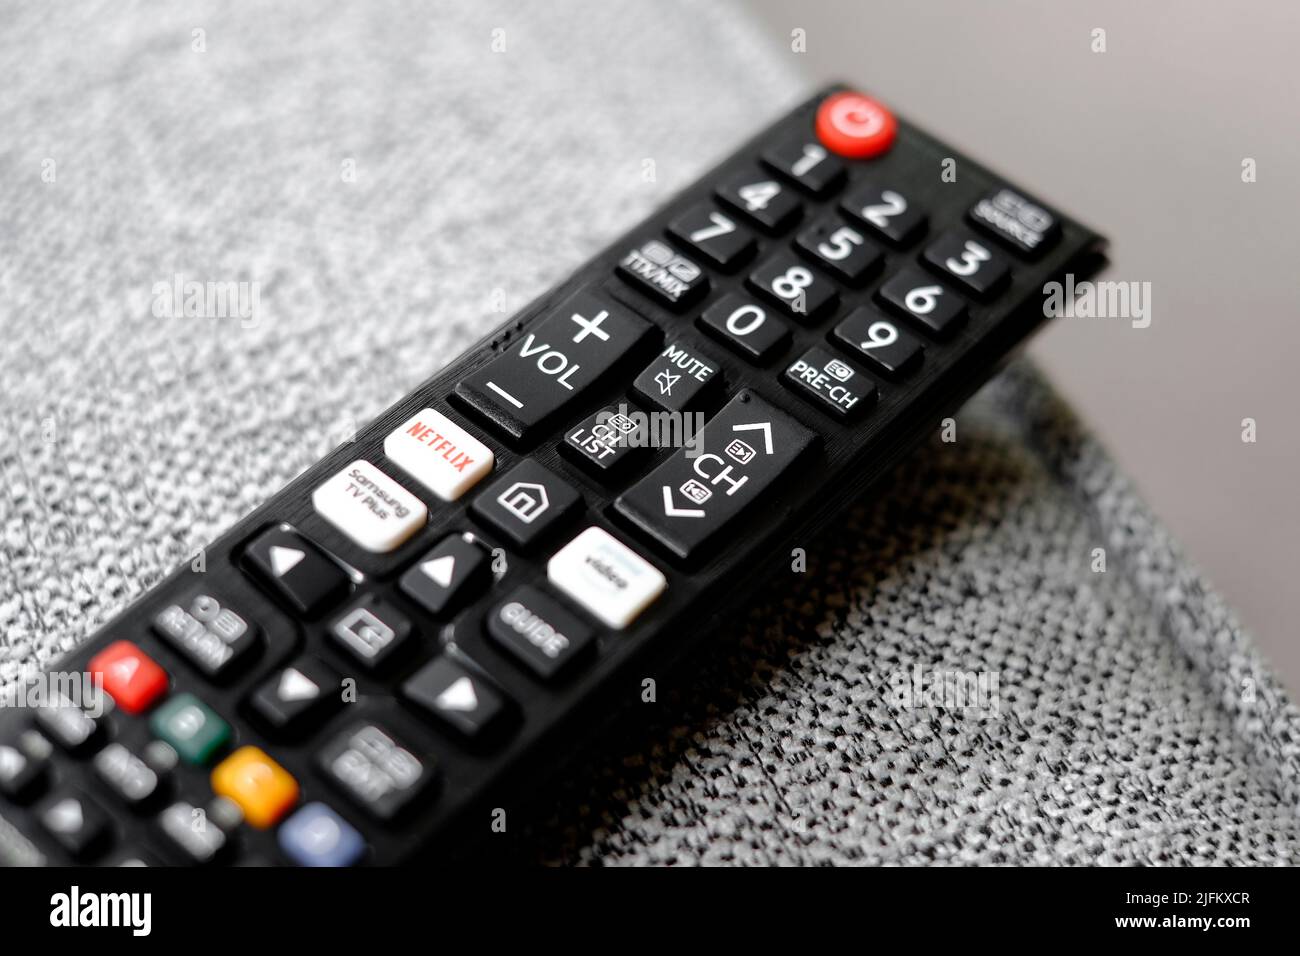 television remote control on fabric sofa Stock Photo